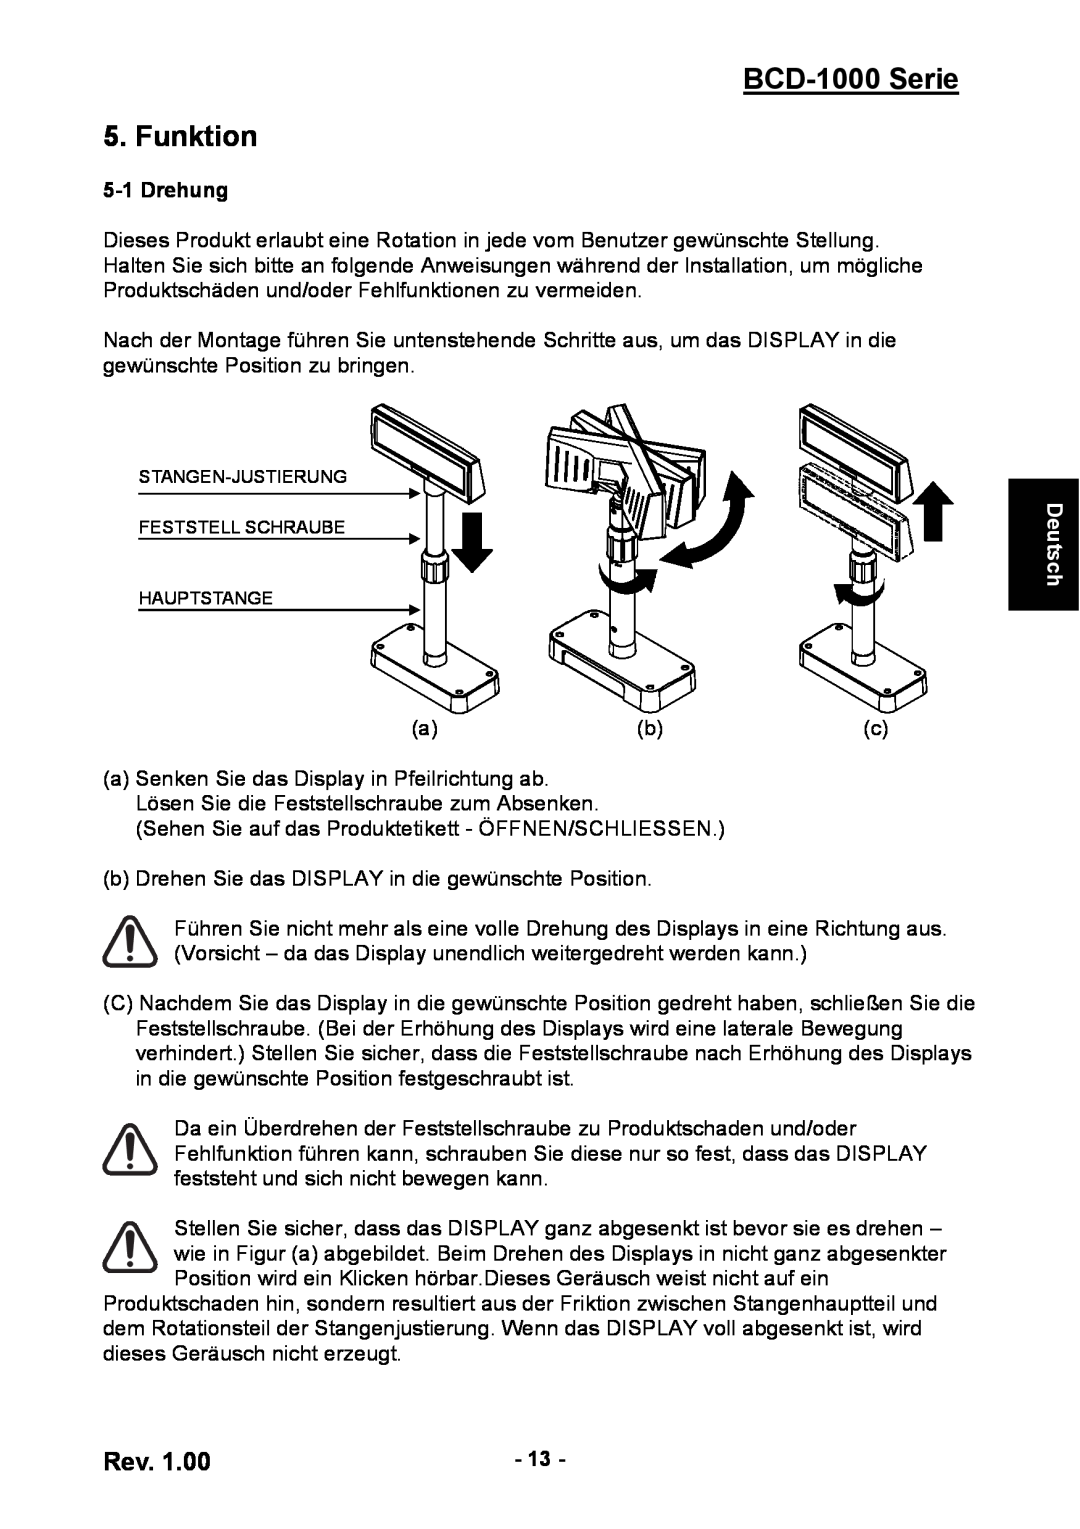 Samsung user manual BCD-1000 Serie 5. Funktion, Drehung, Deutsch 